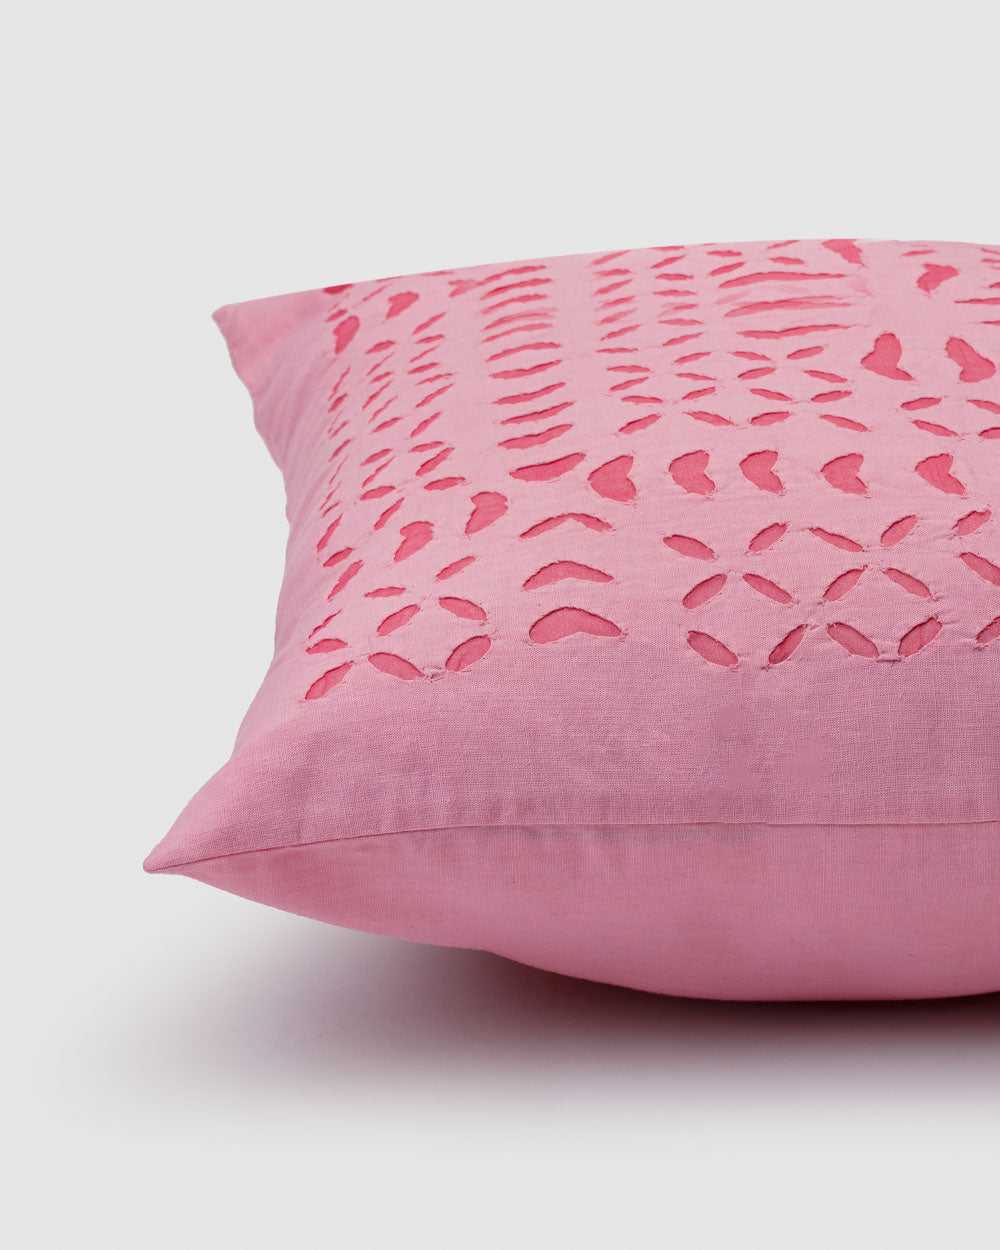 Cushion Cover Applique Makhana Design, Light Pink